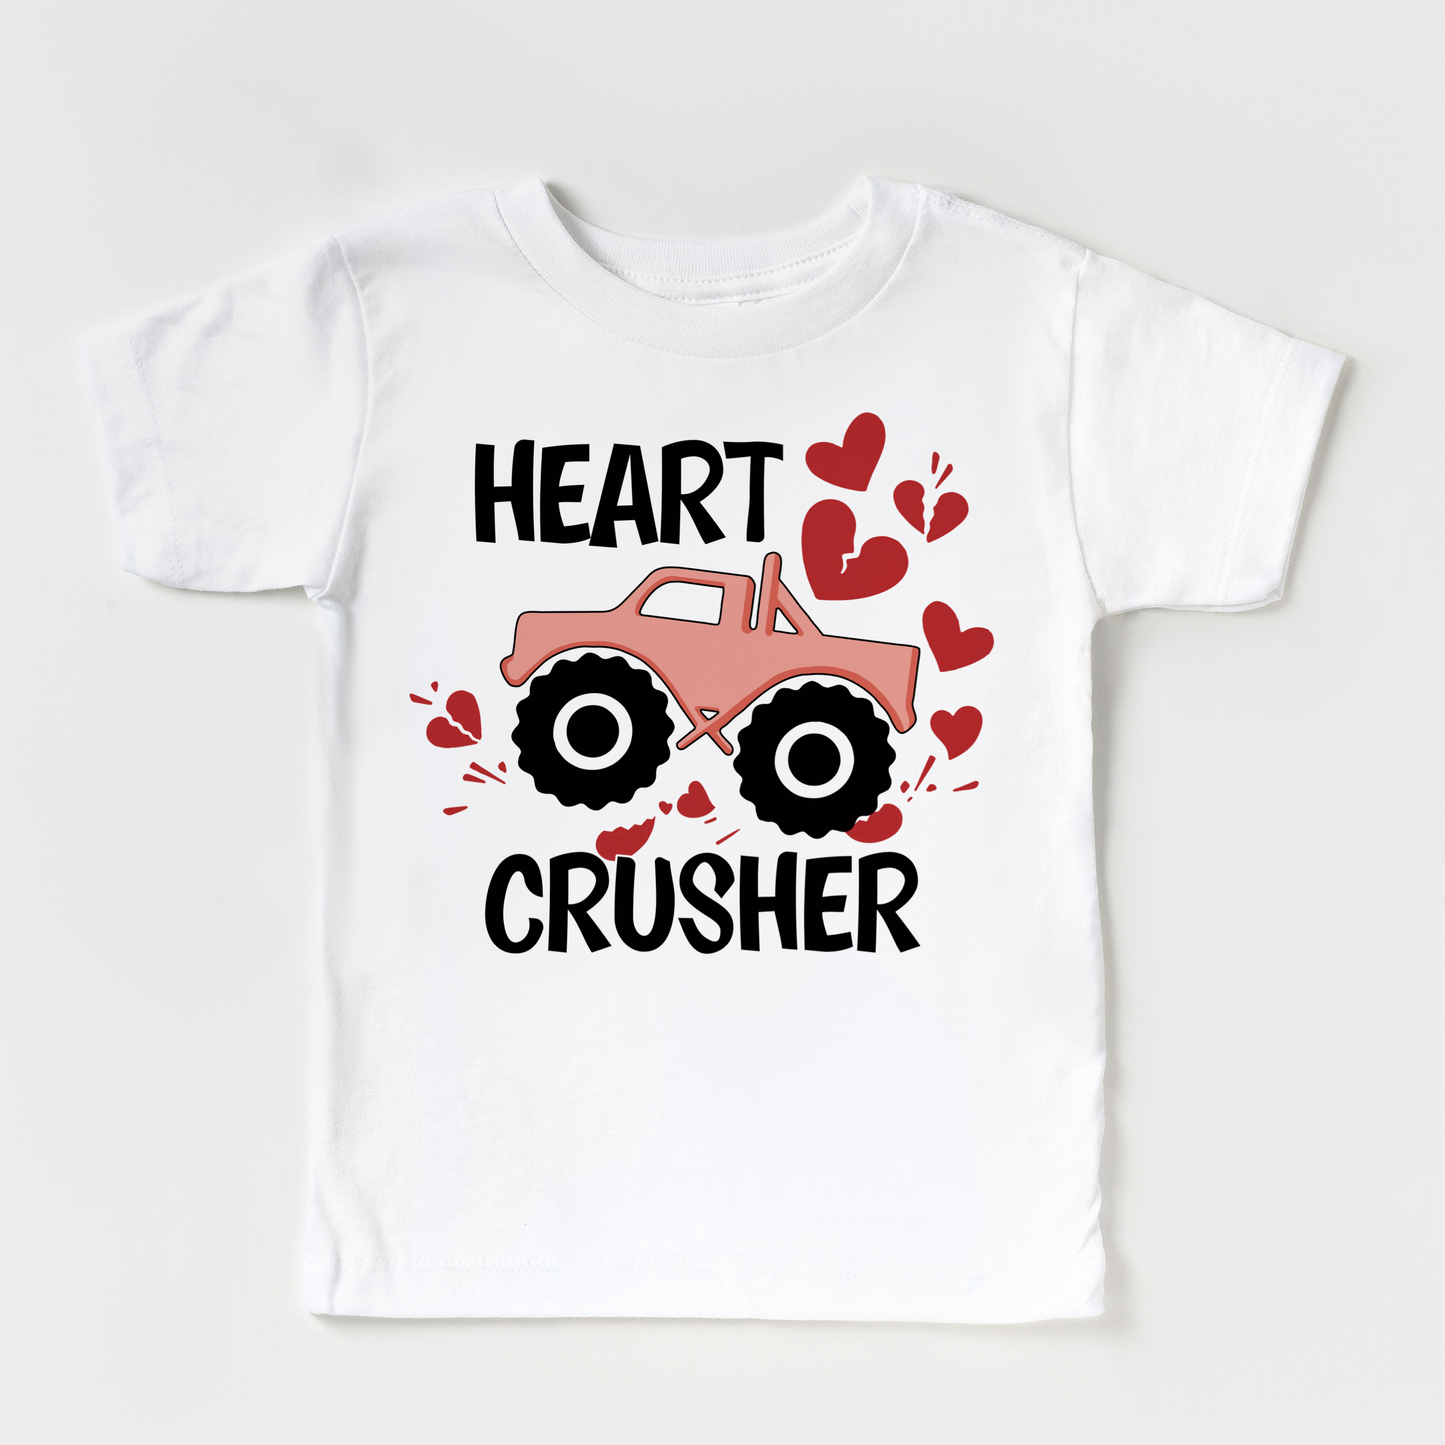 Heart Crusher Valentines shirt for kids